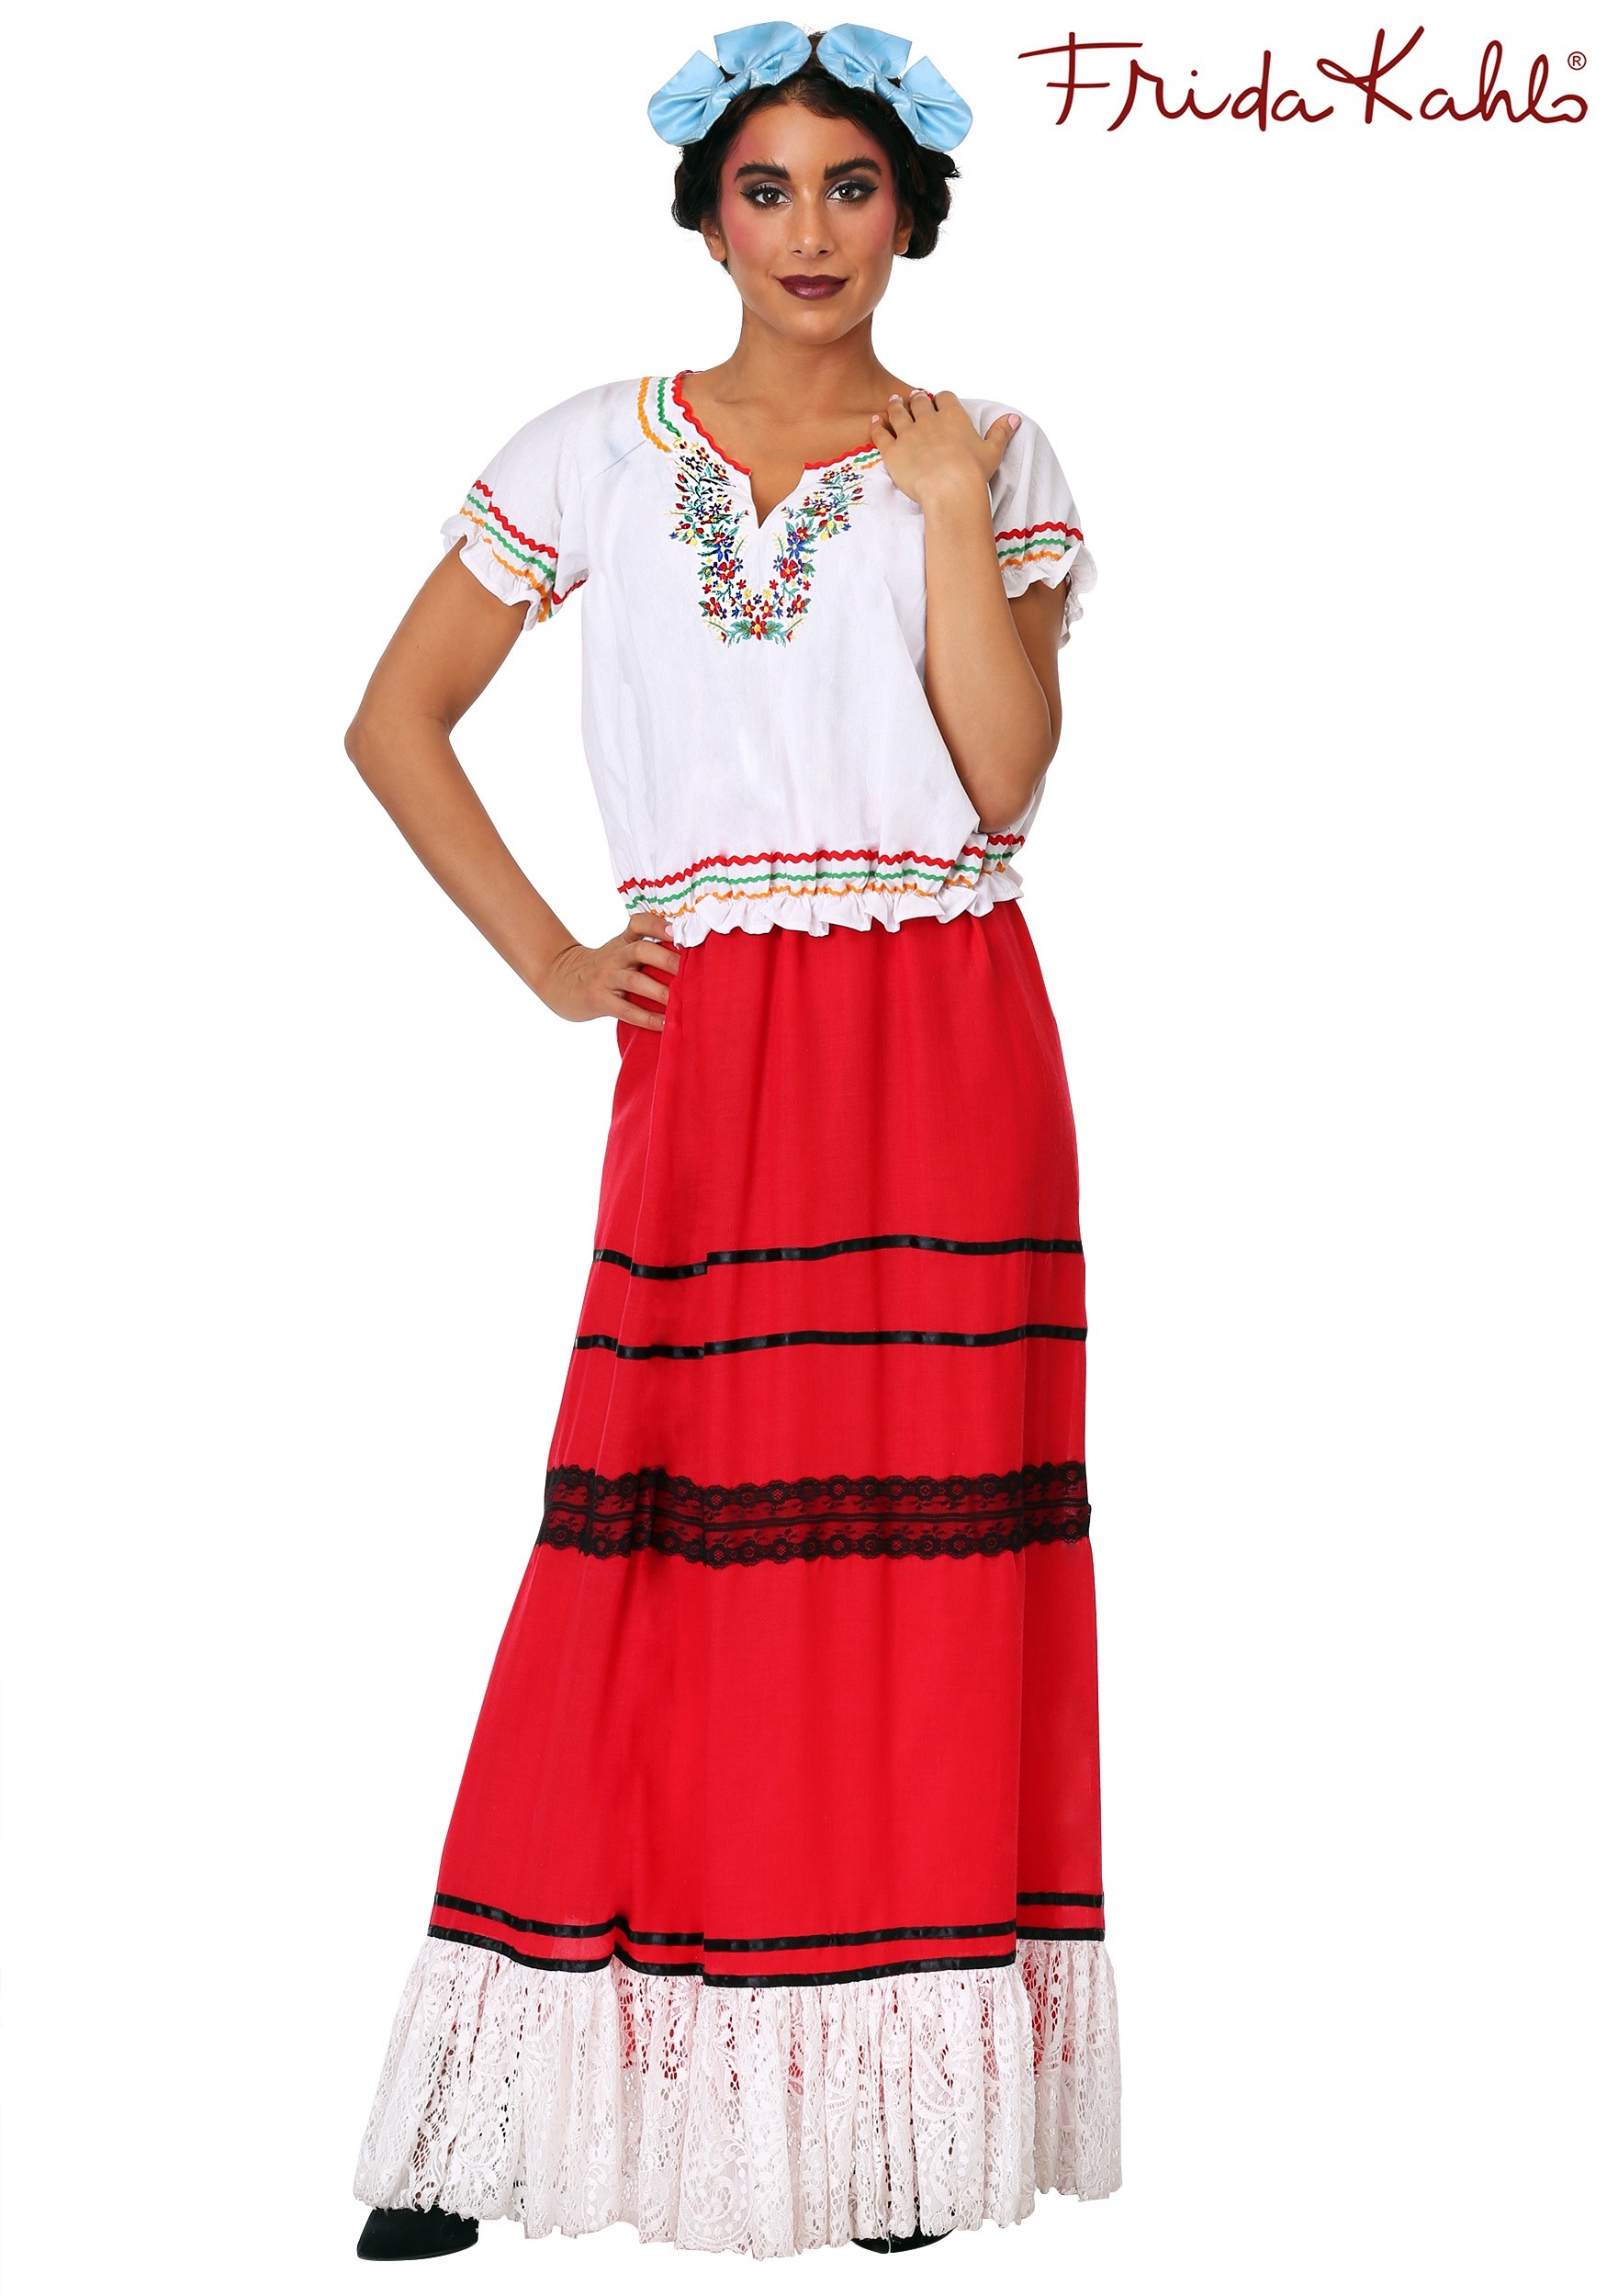 Women’s Plus Size Red Frida Kahlo Costume